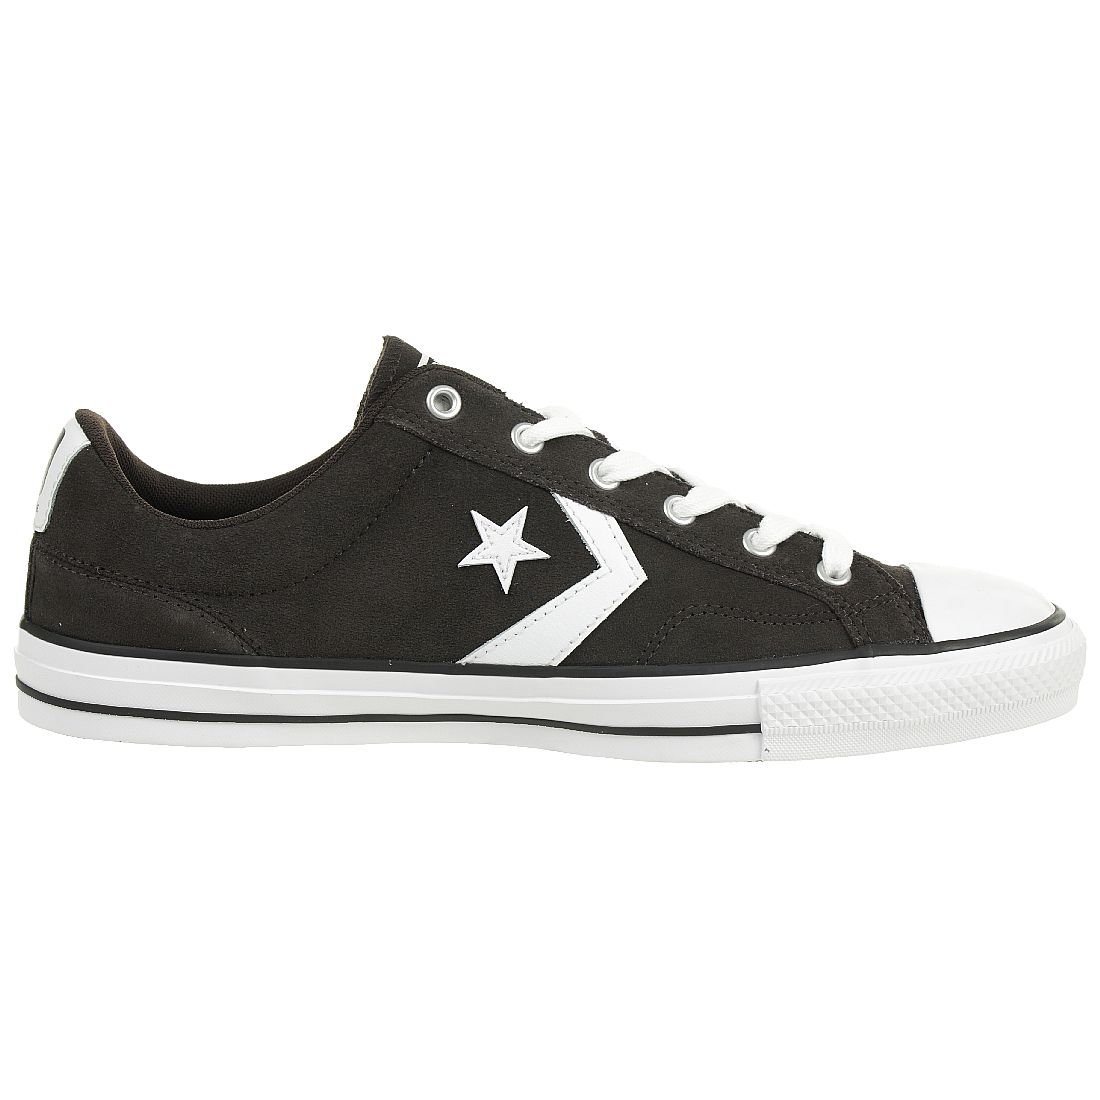 Converse STAR PLAYER OX Schuhe Sneaker Wildleder braun 165464C